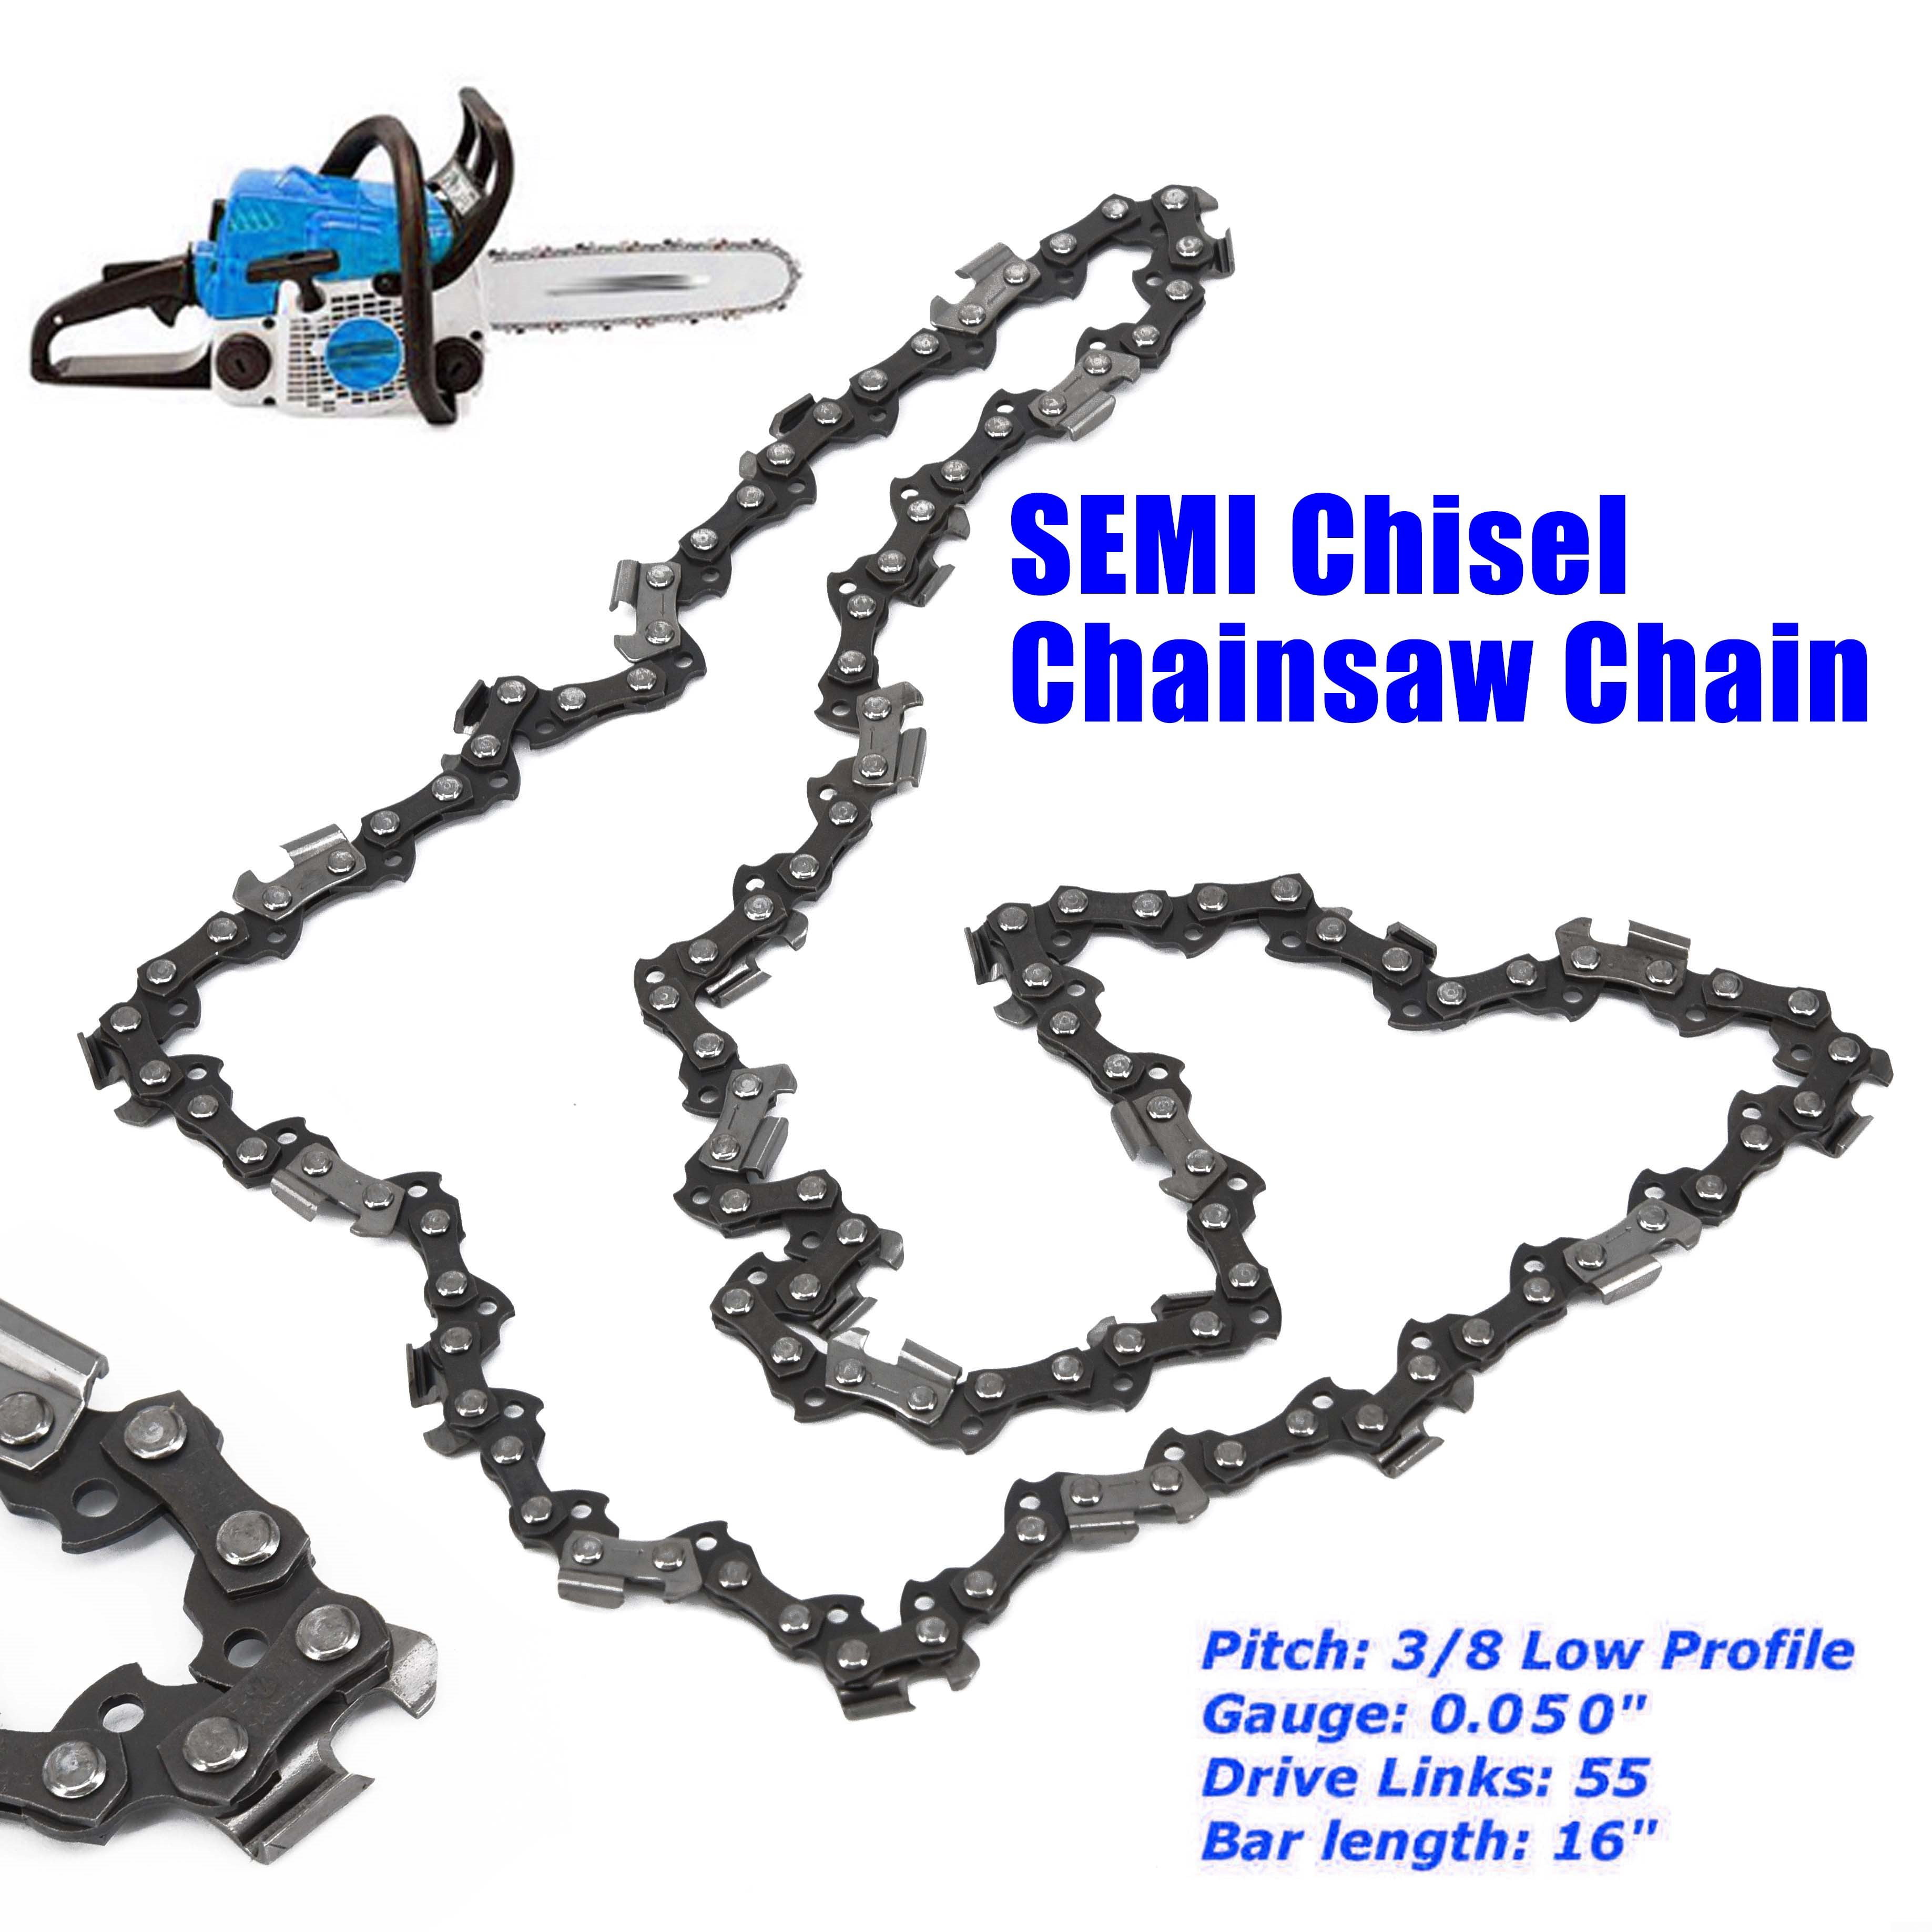 MS210-3/8" 0.050" 55 DL 3x 16" Semi Chisel Chainsaw Chain for Stihl 025 